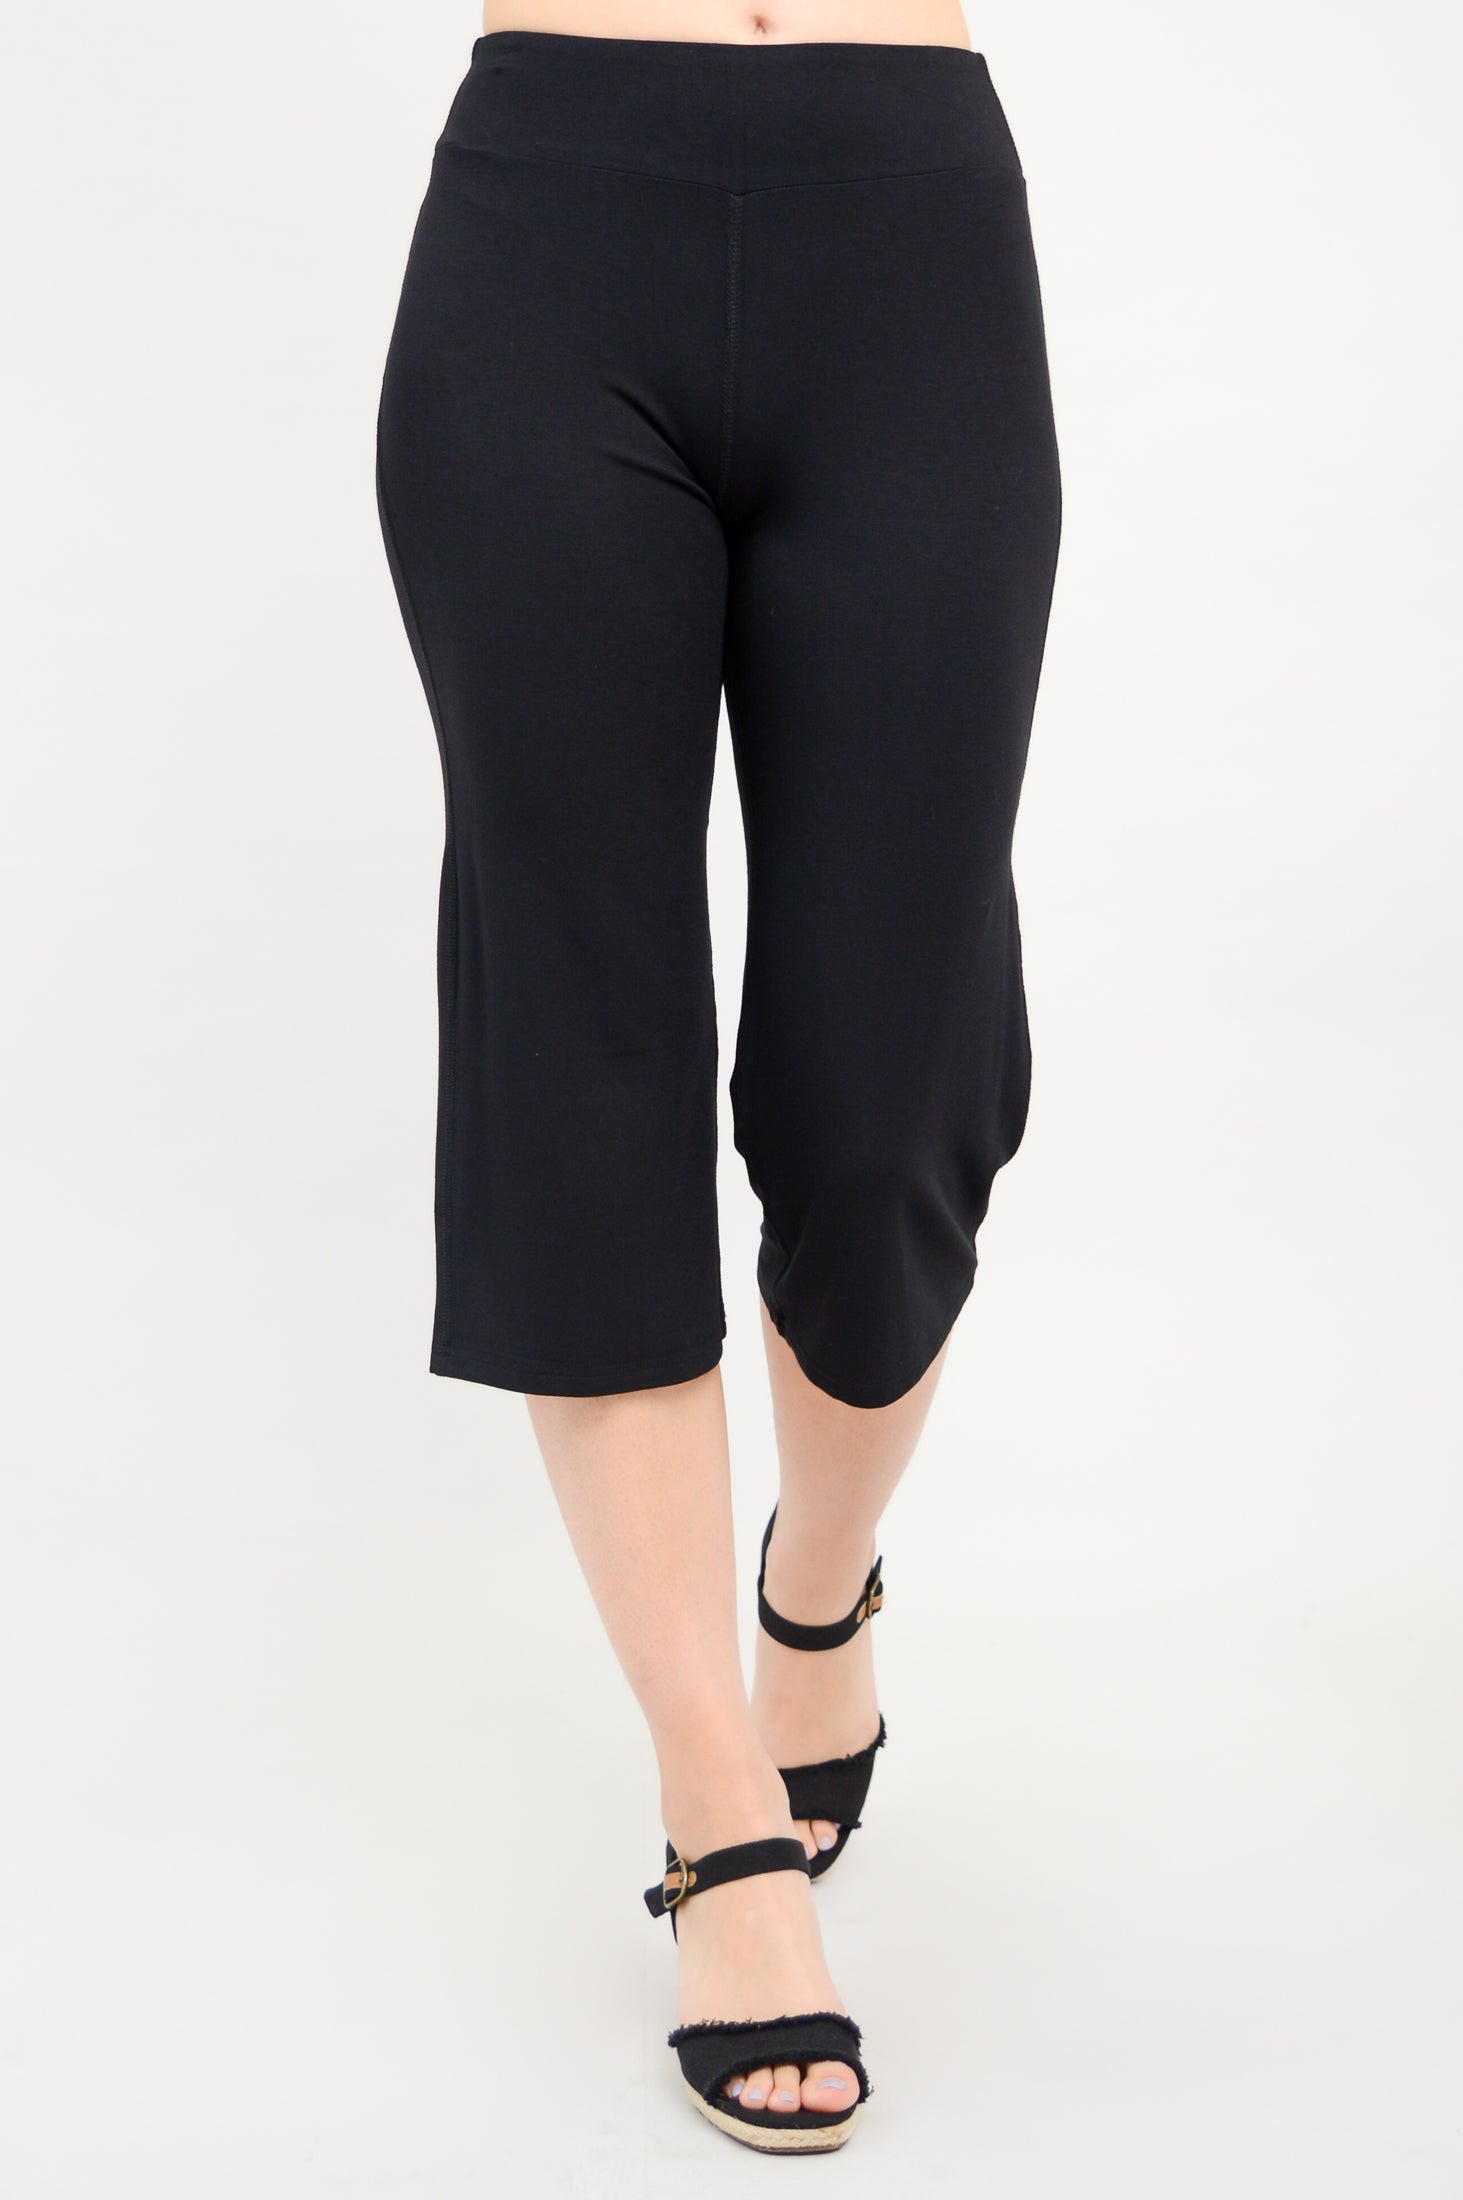 Bliss Womens Size Small Pull On White Black Capri Leggings Yoga Pants